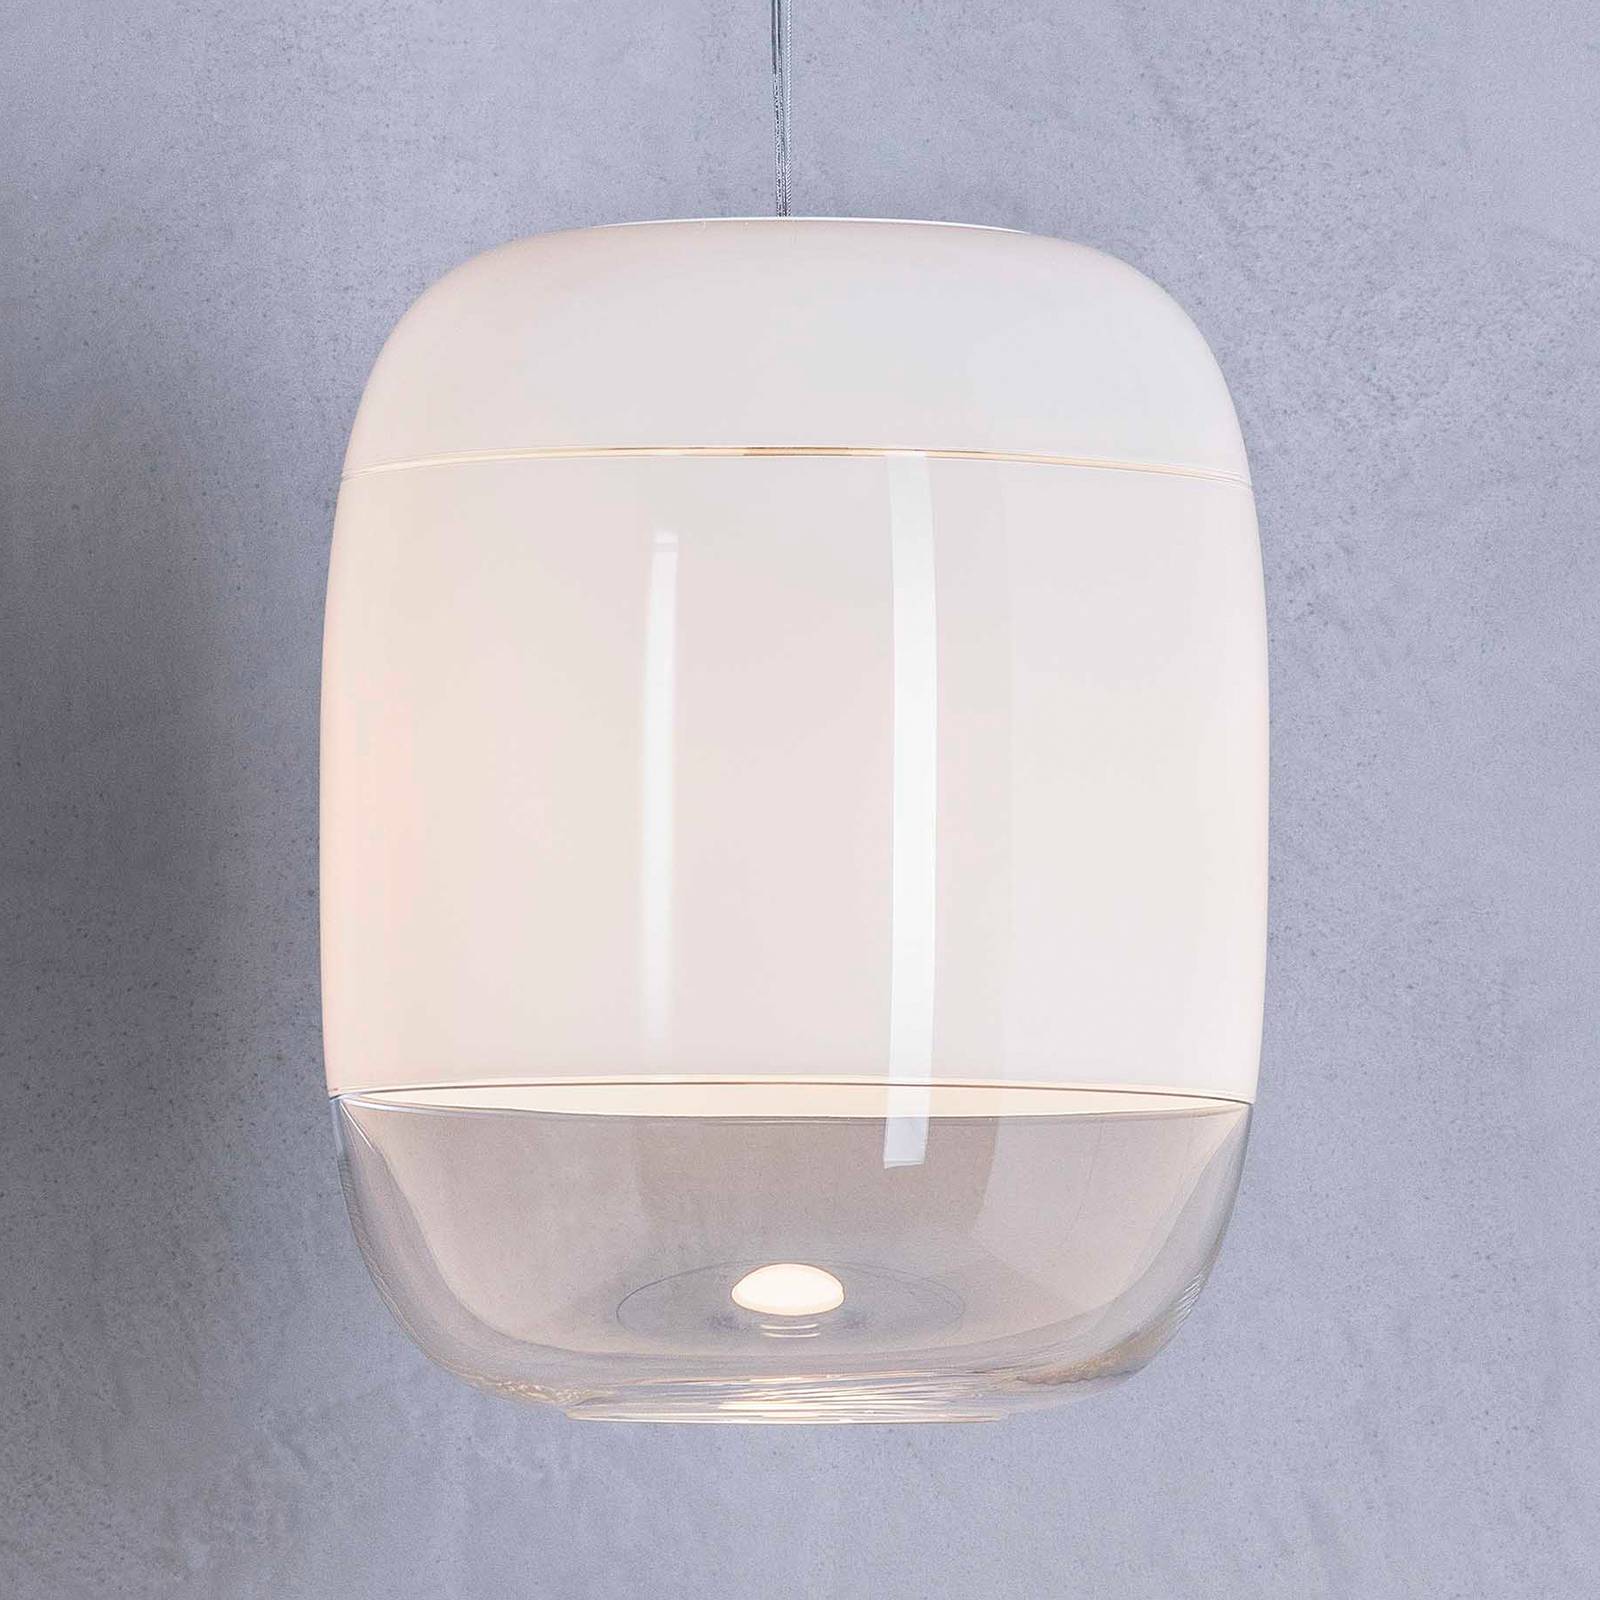 Prandina Gong S3 hængelampe hvid